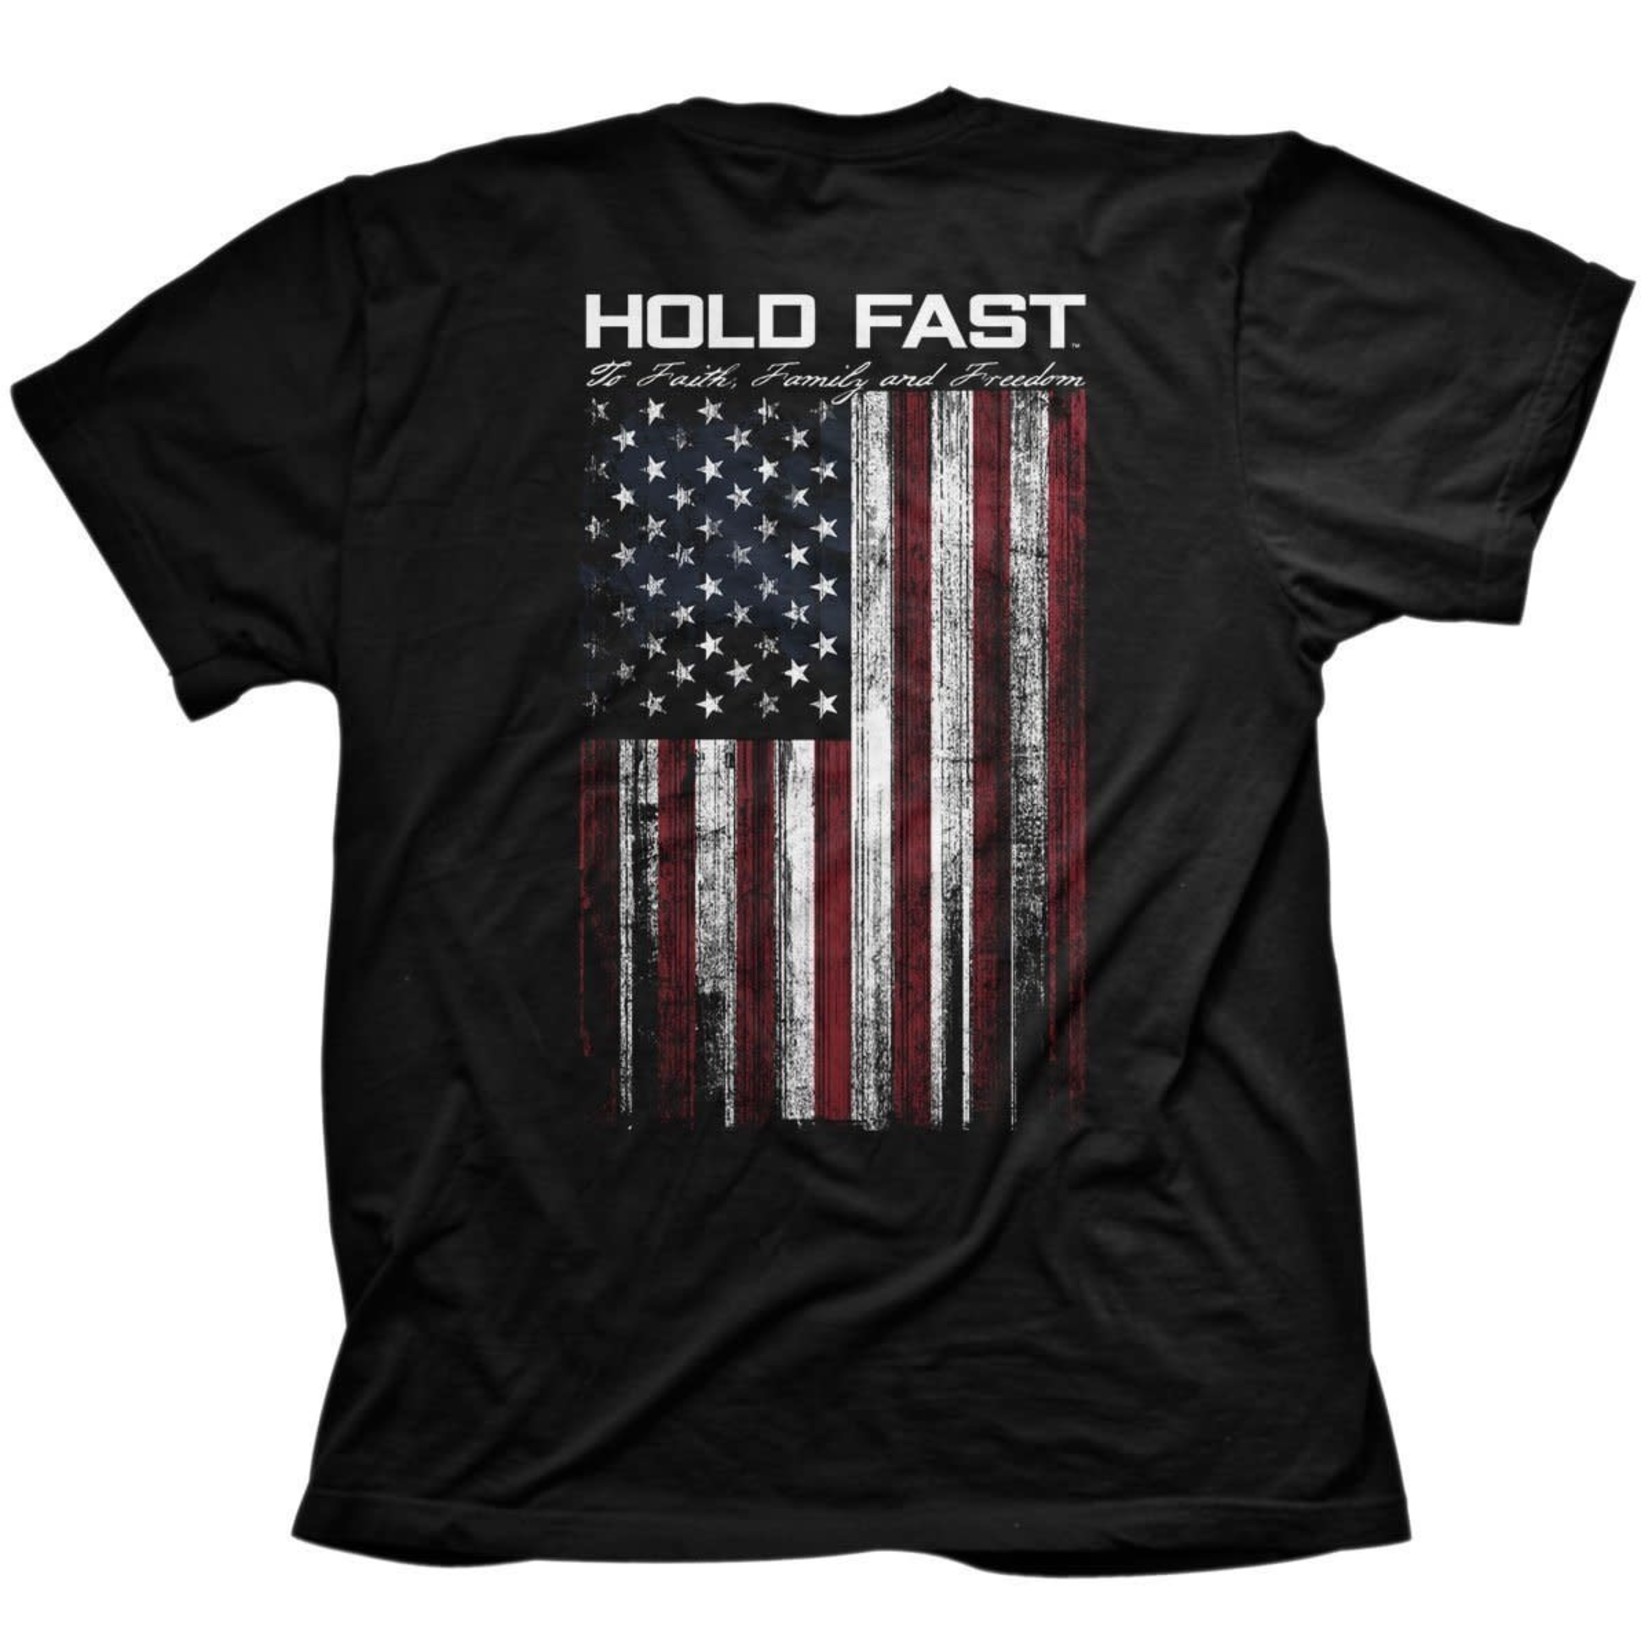 Hold fast flag shirt